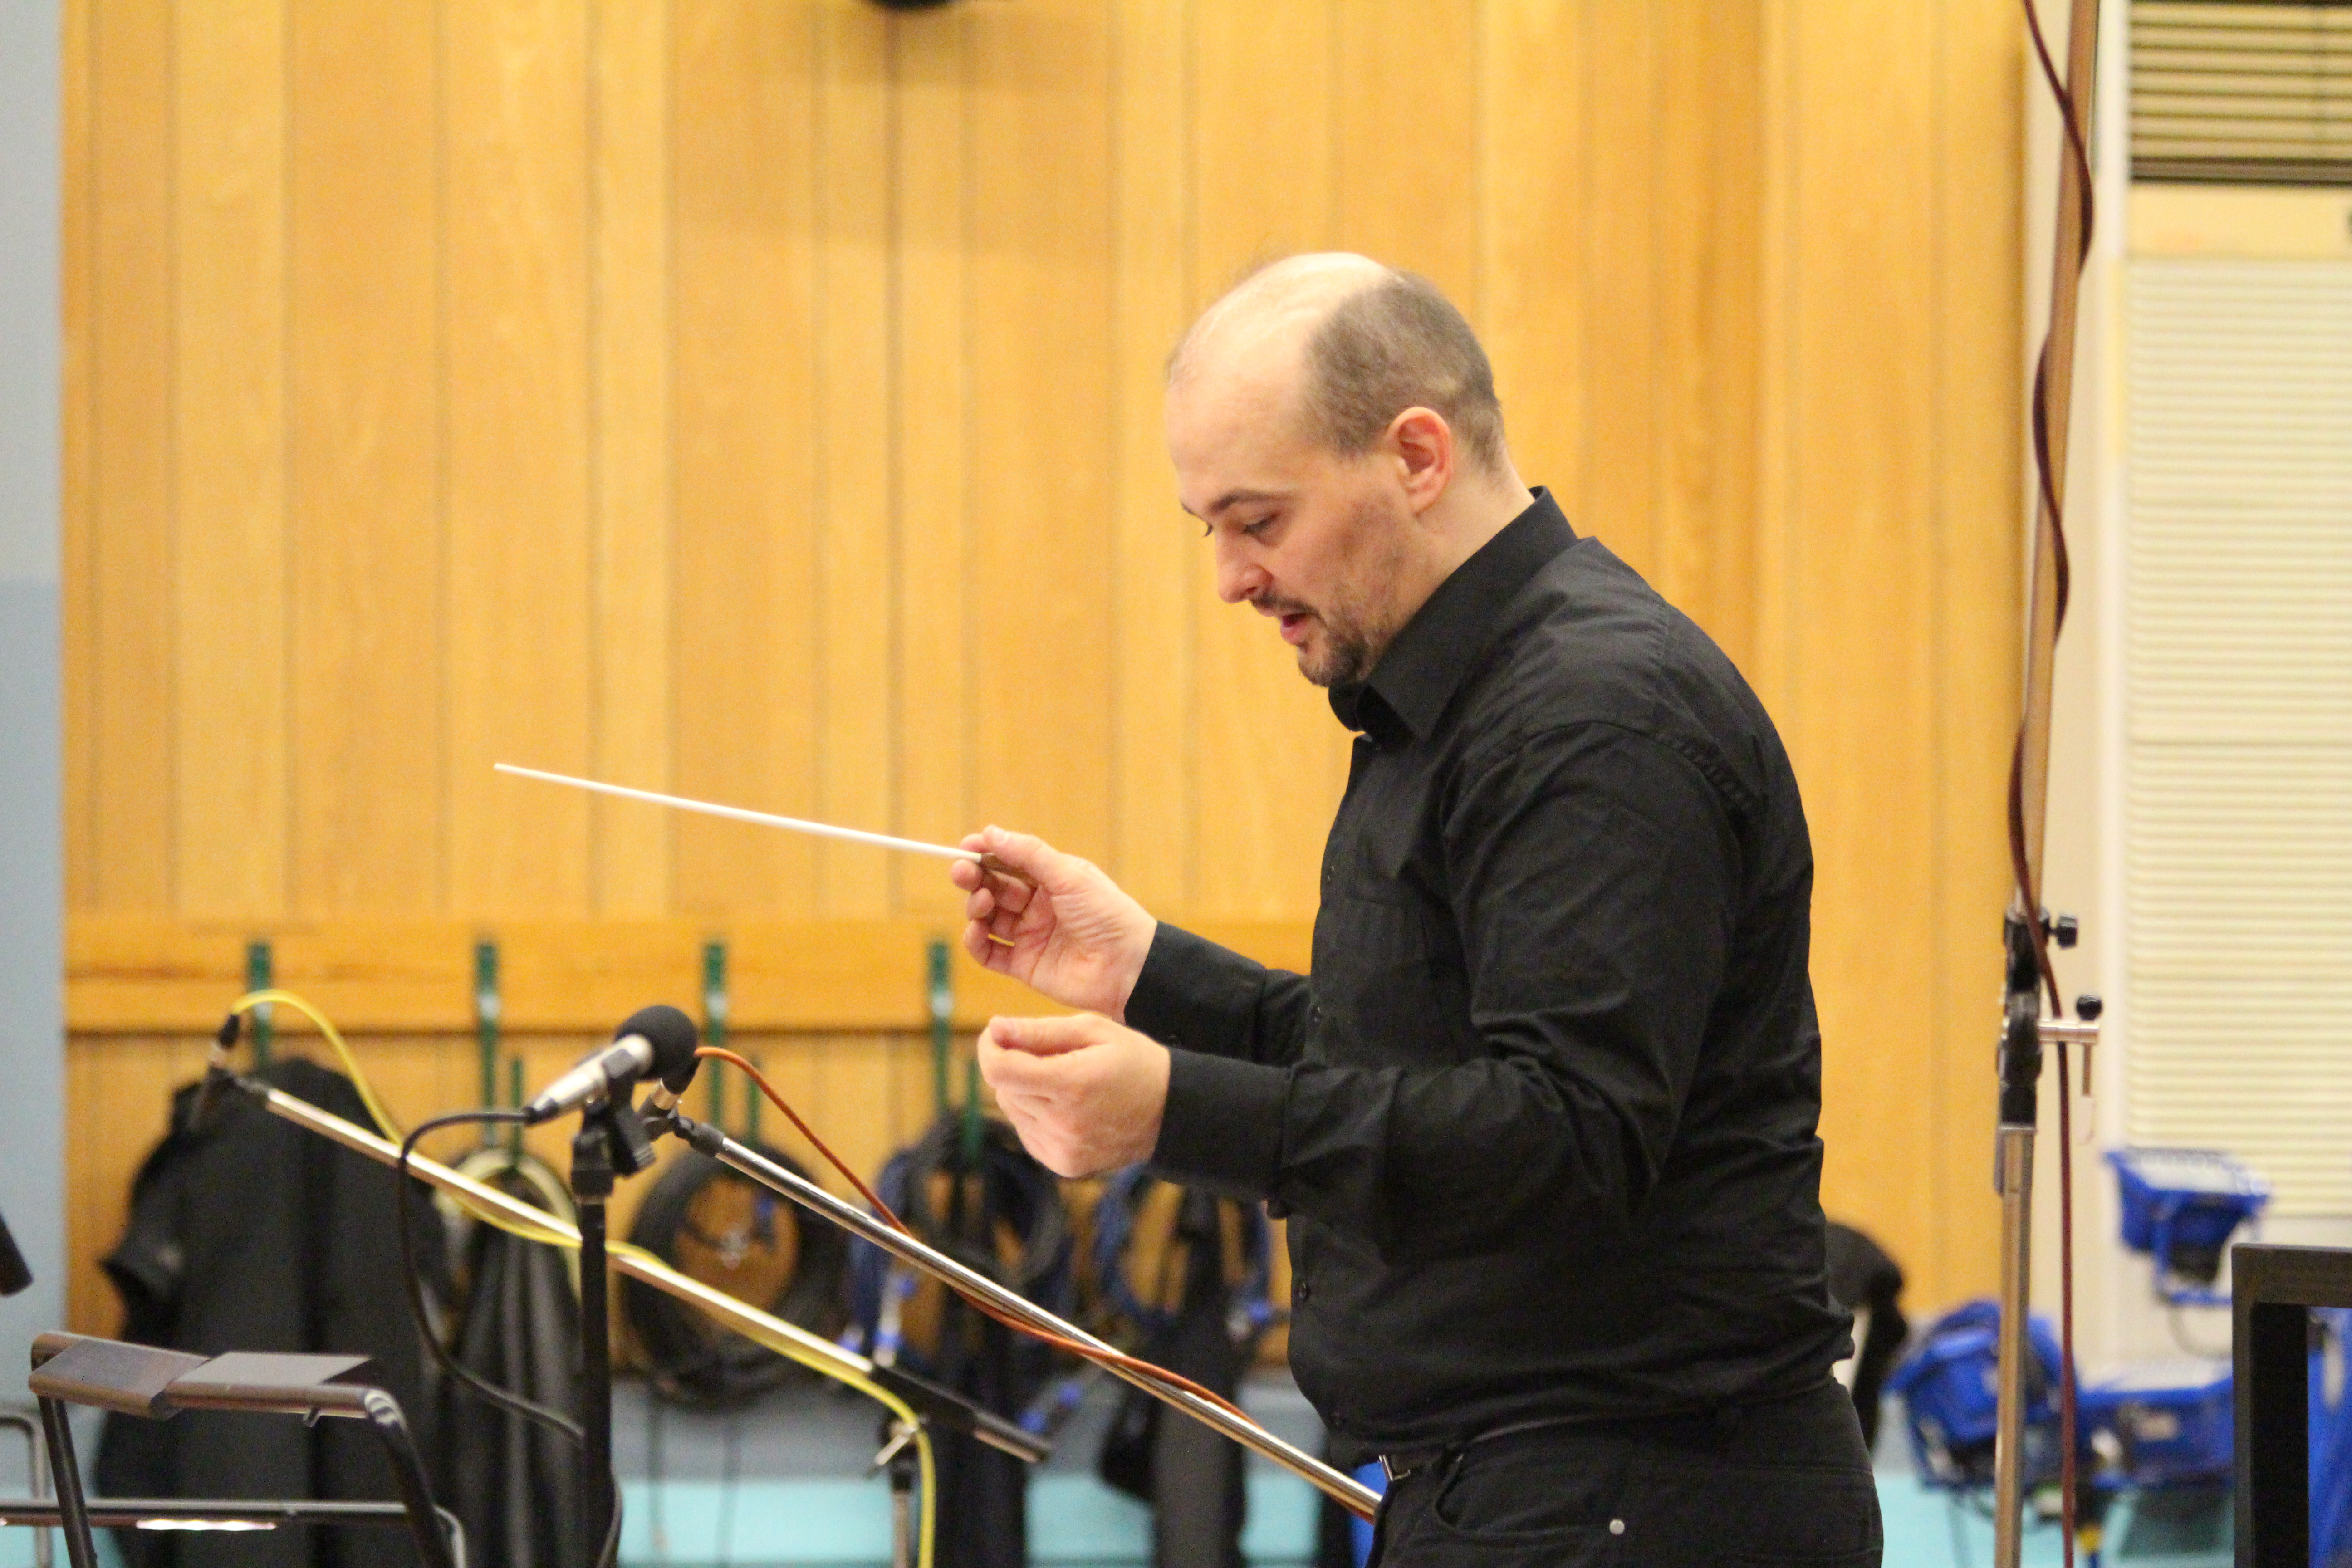 Maestro Predrag Gosta conducting the London Symphony Orchestra